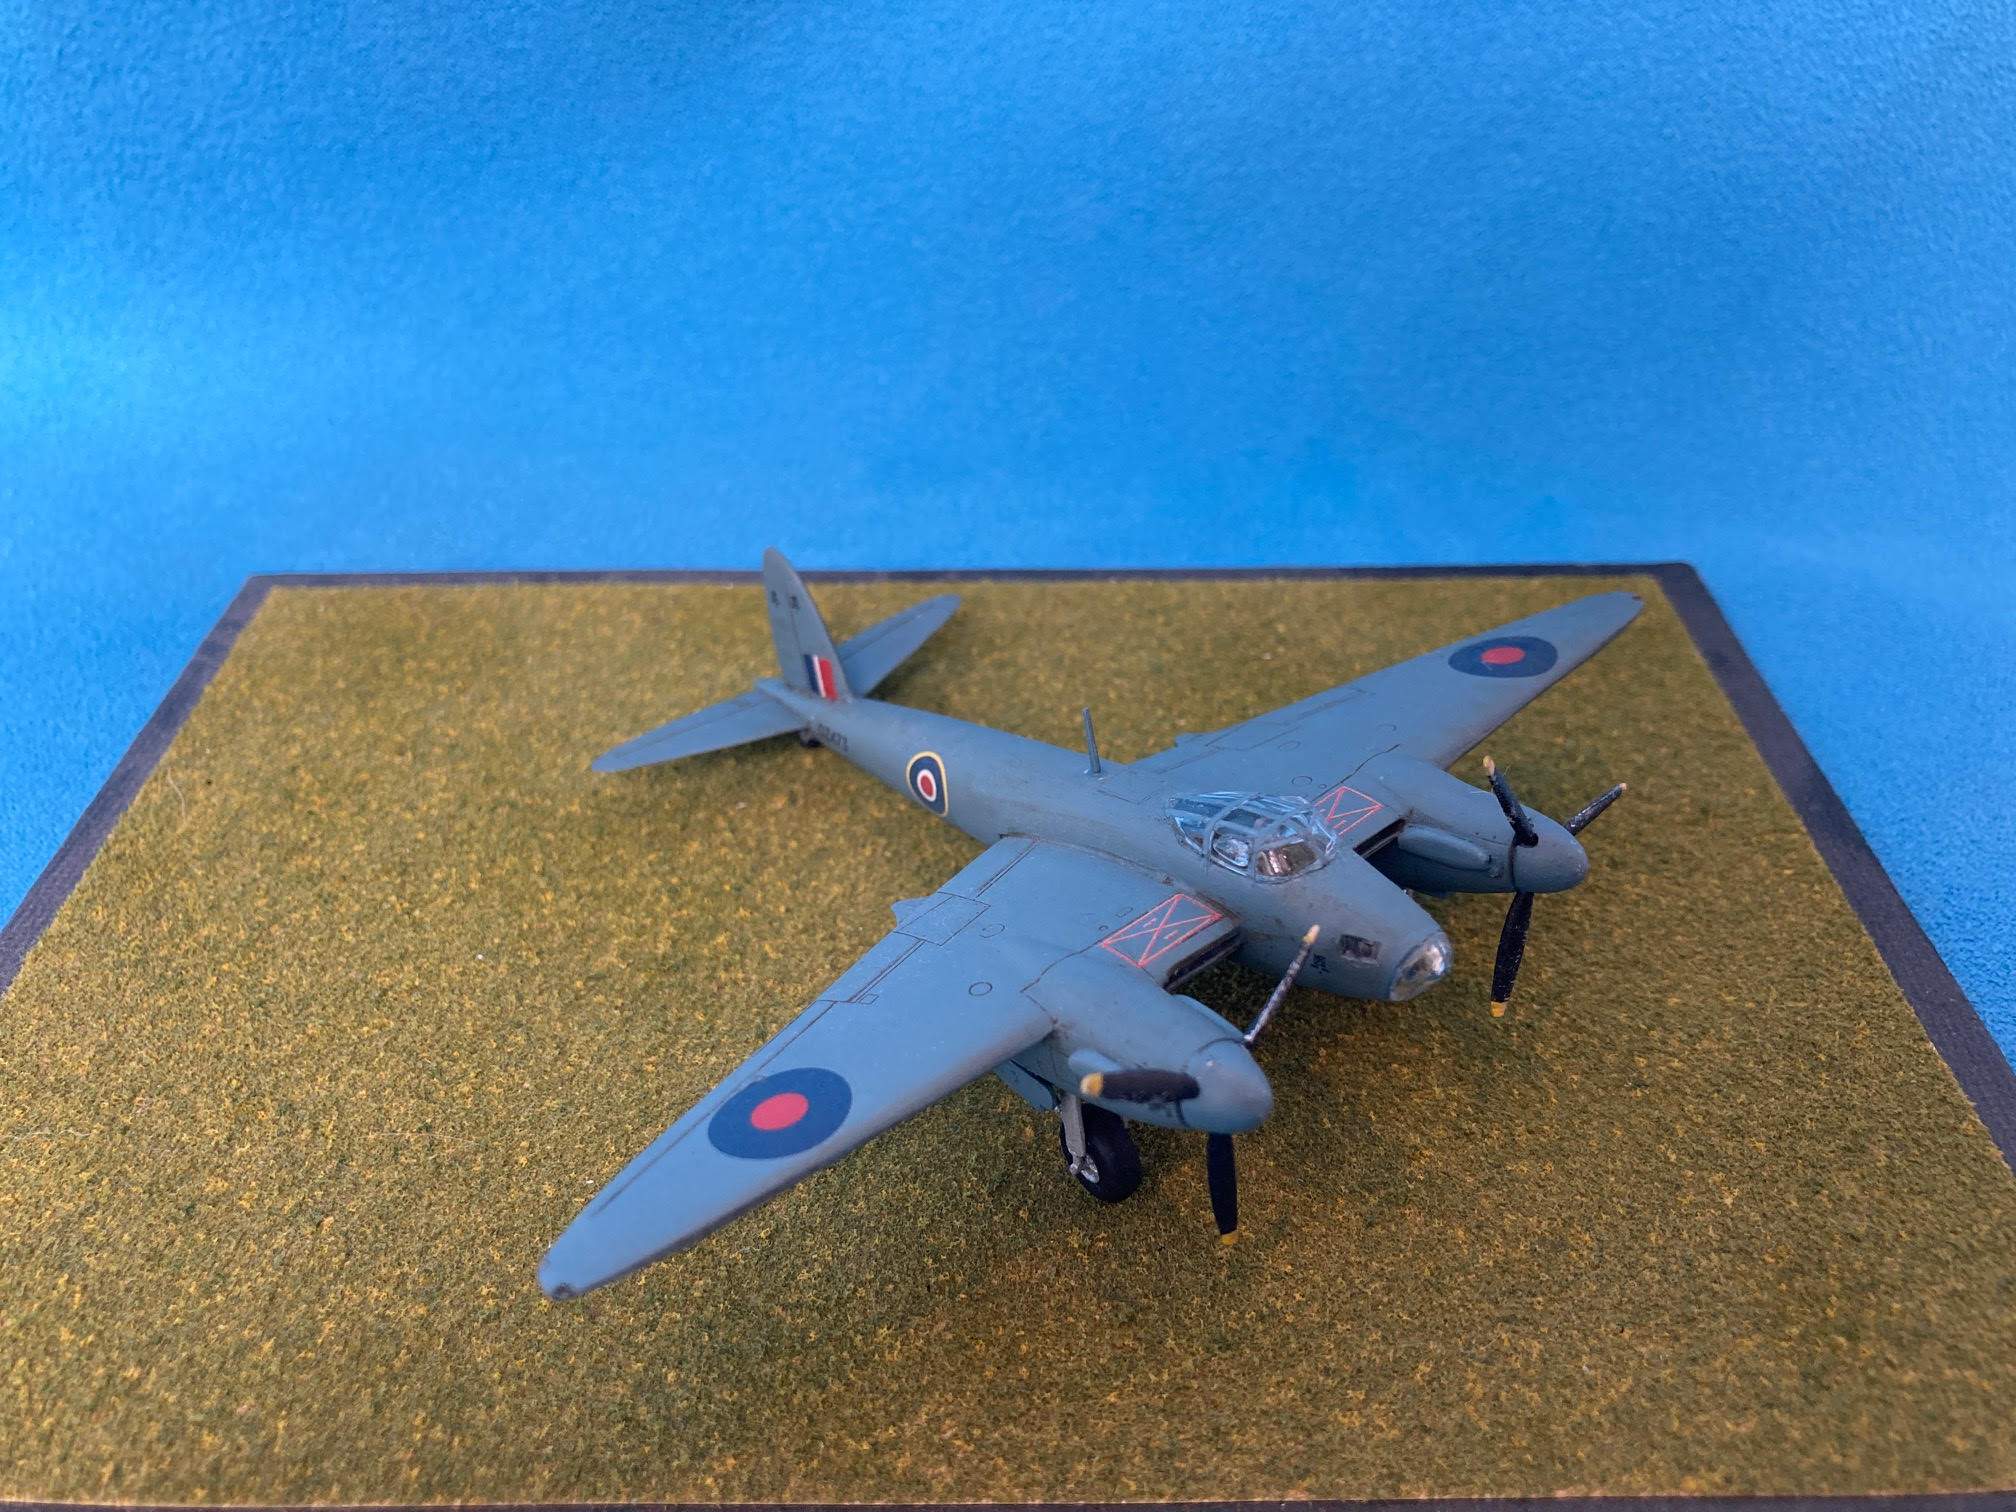 540sqn RAF. Mark 1 Models, 1:144.